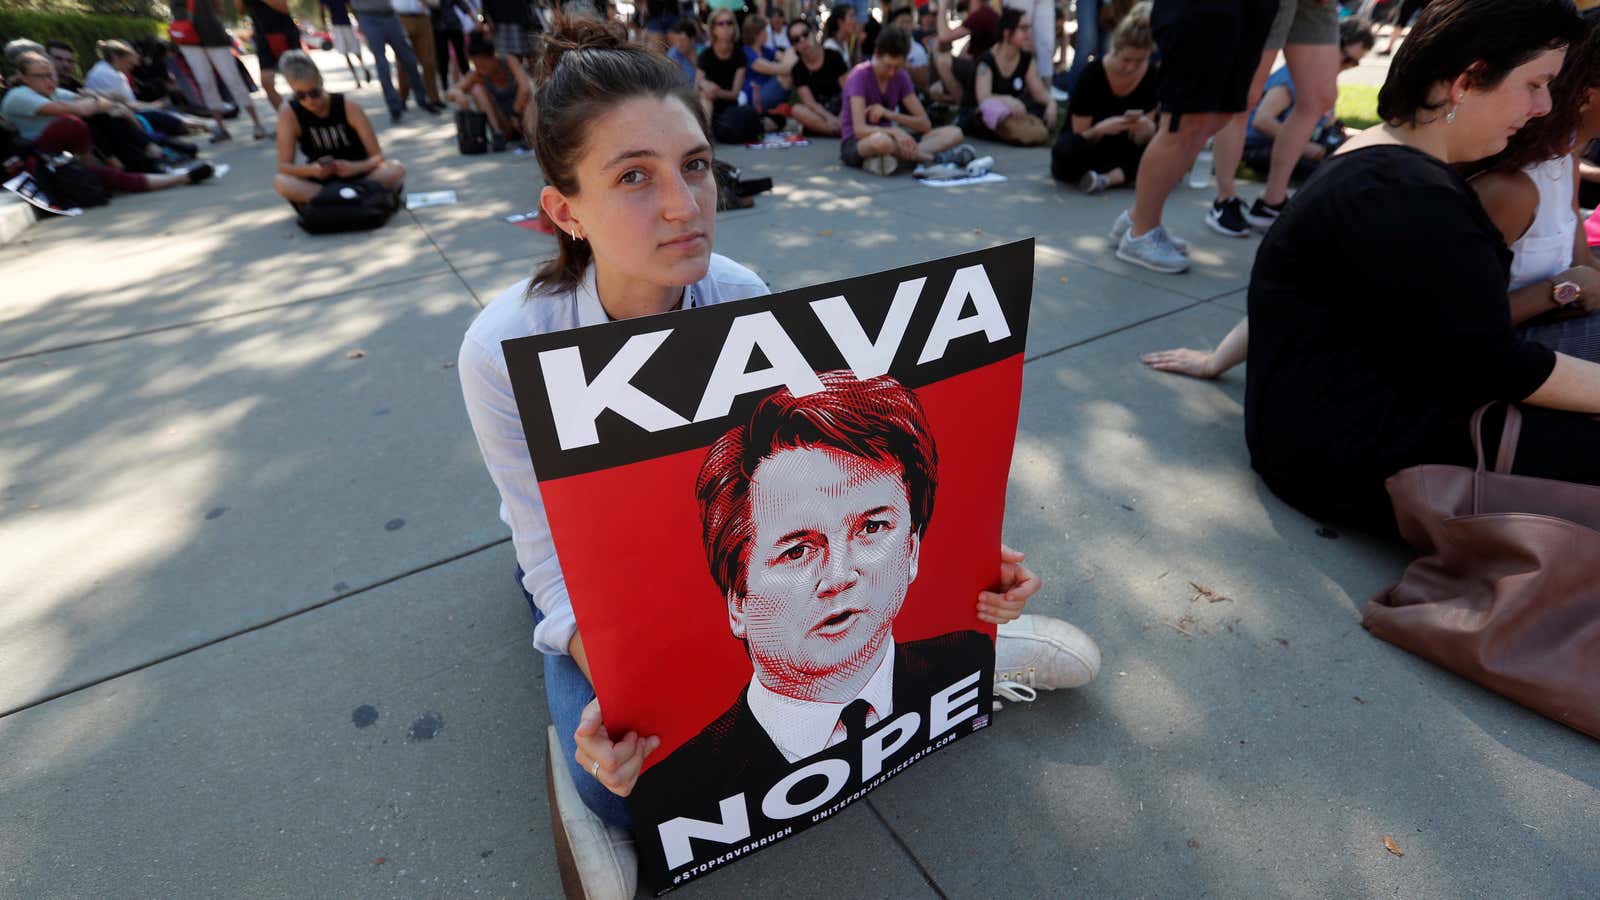 A demonstrator holds a sign opposing Kavanaugh.